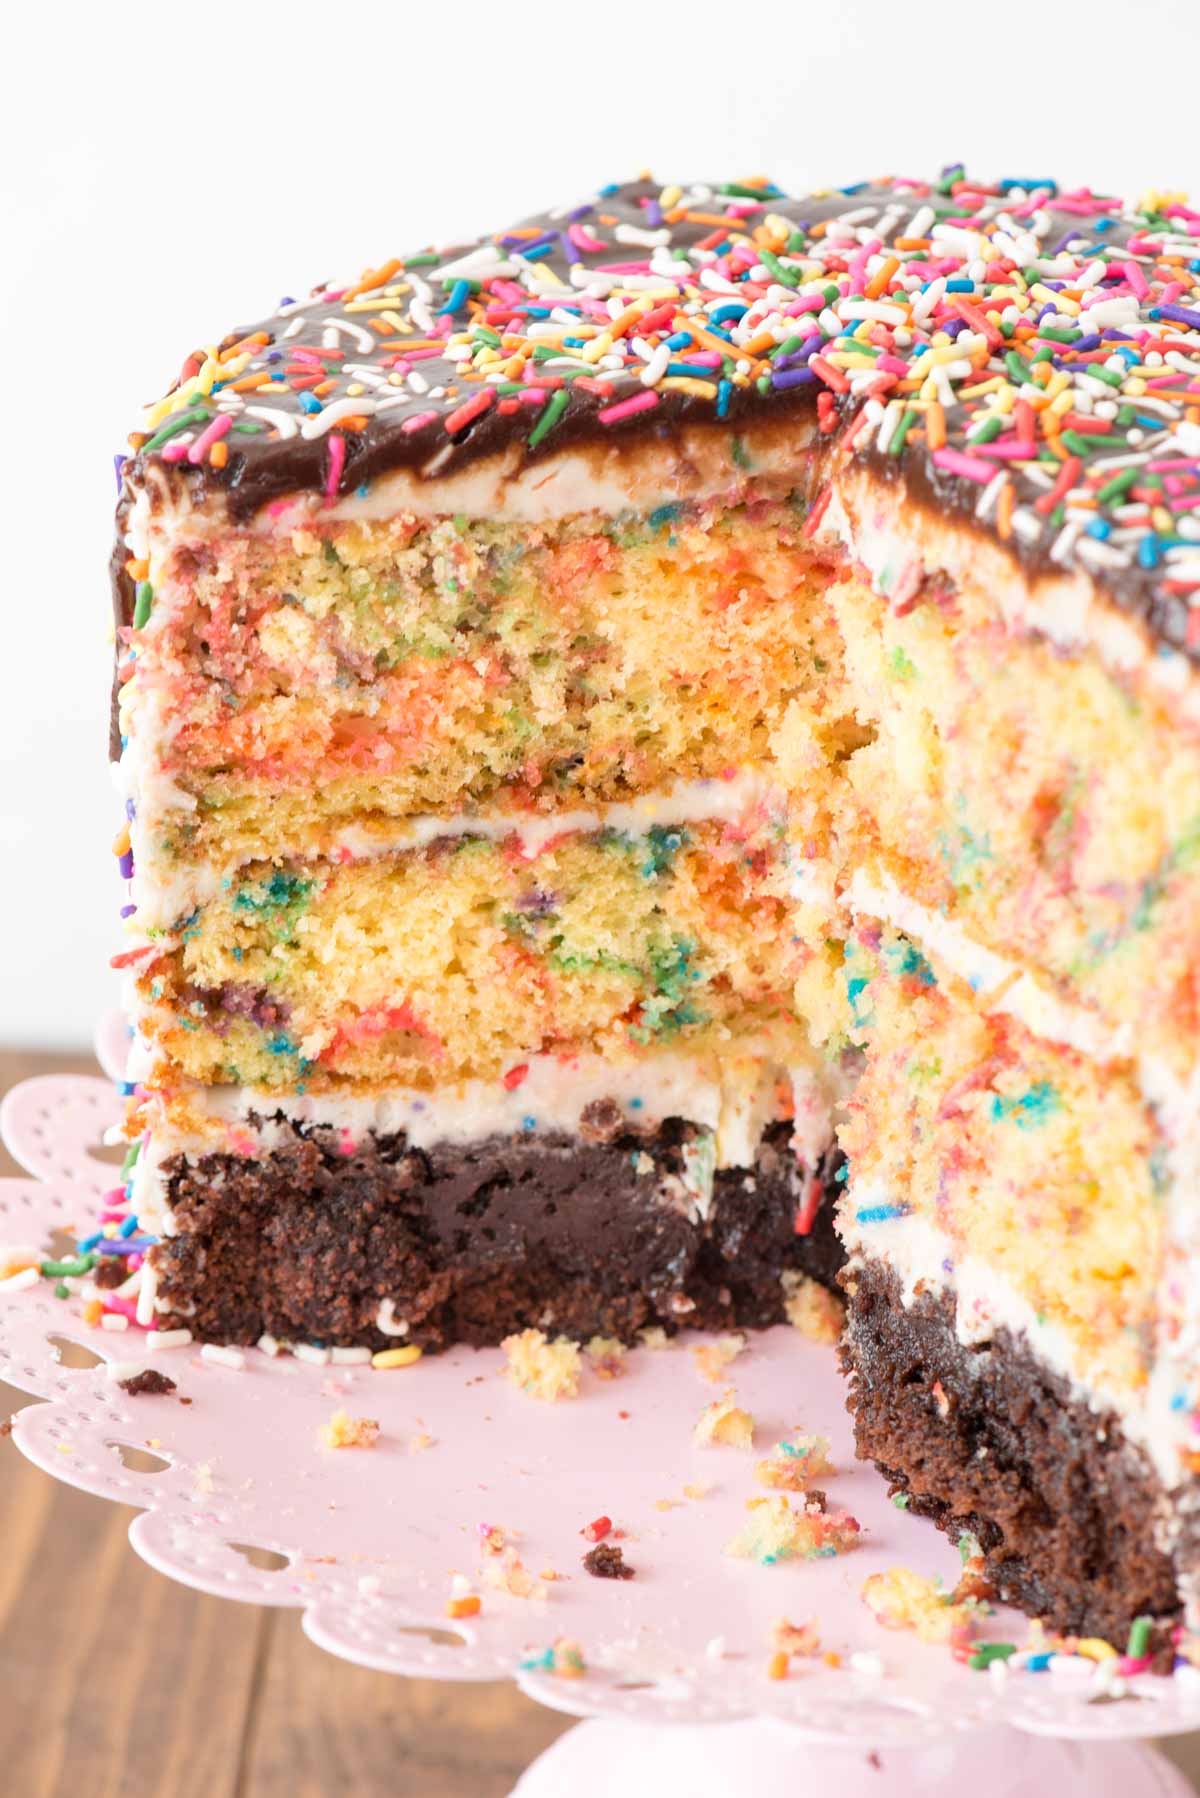 https://www.crazyforcrust.com/wp-content/uploads/2017/09/Easy-Funfetti-Brownie-Layer-Cake-7-of-8.jpg